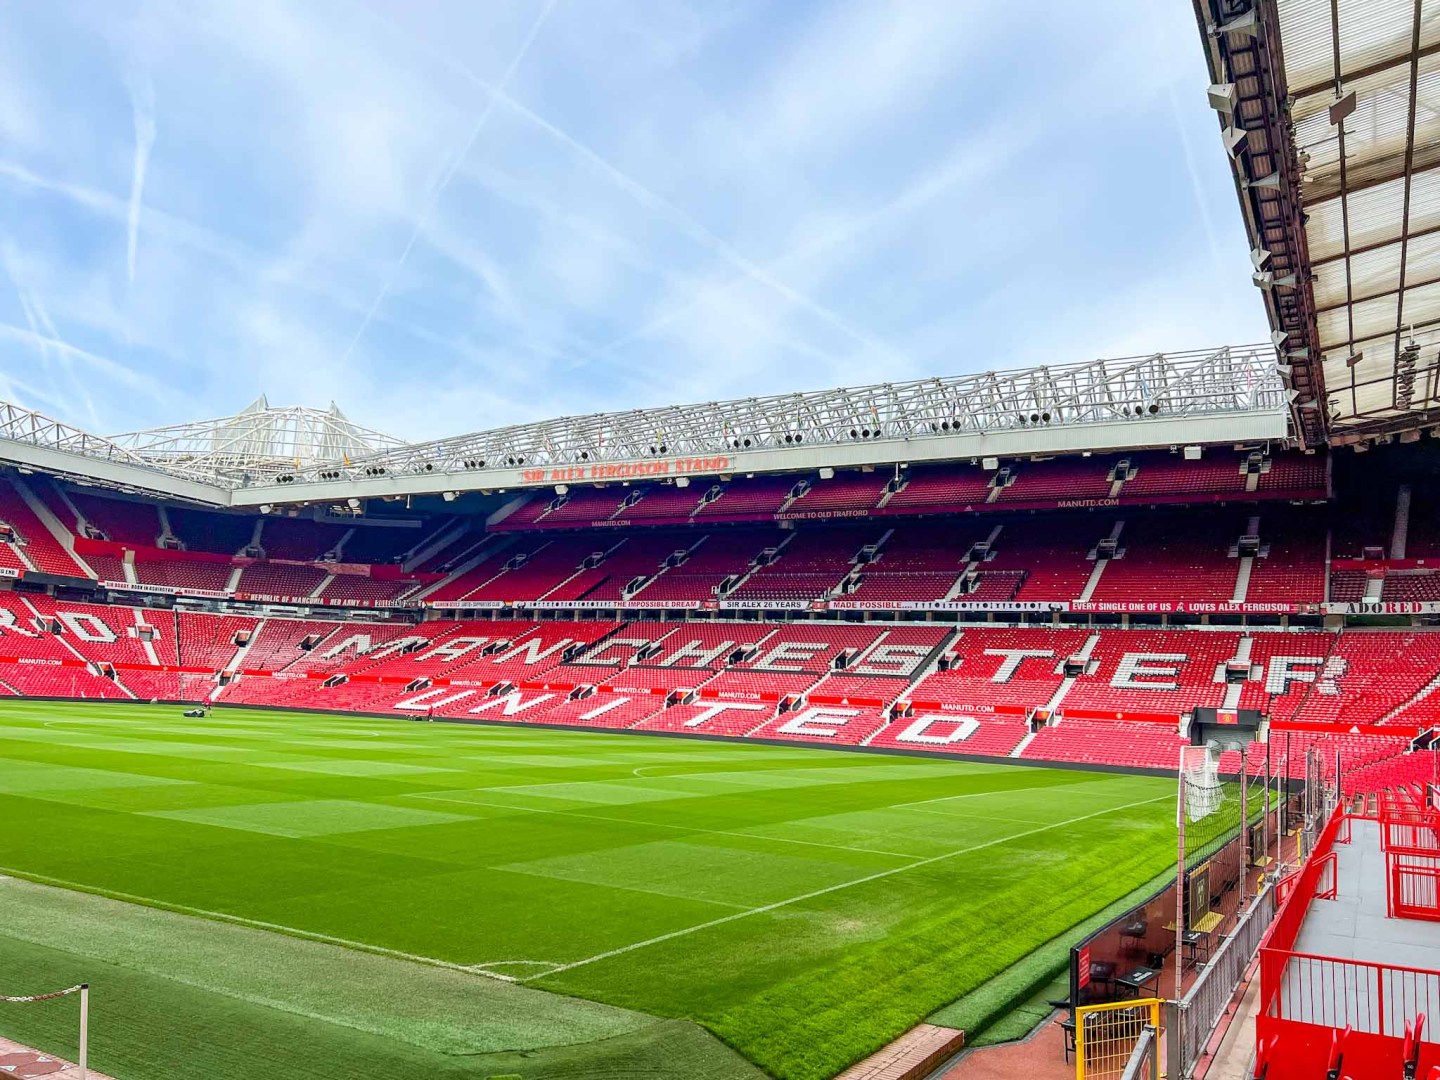 Visita al estadio del Manchester United, foto de la esquina del campo